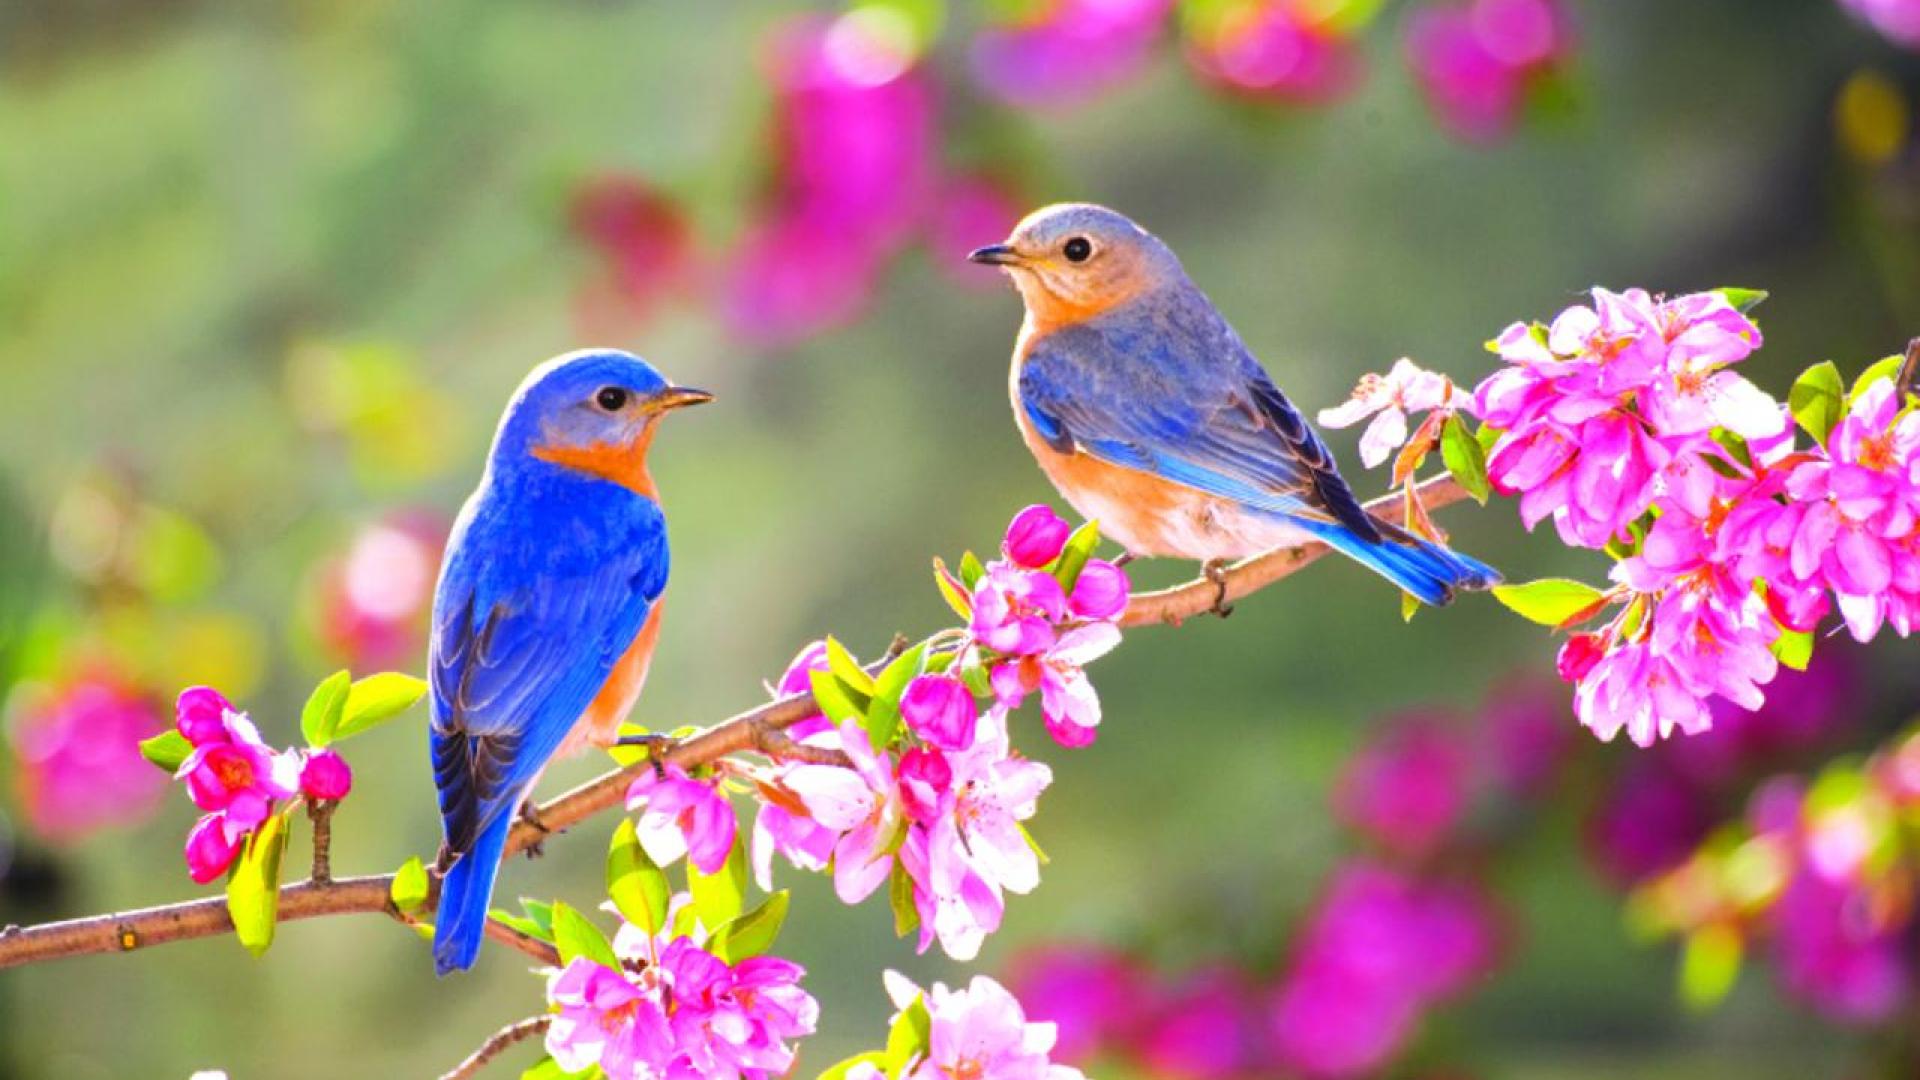 SPRING BLUE BIRDS WALLPAPER HD Wallpapers